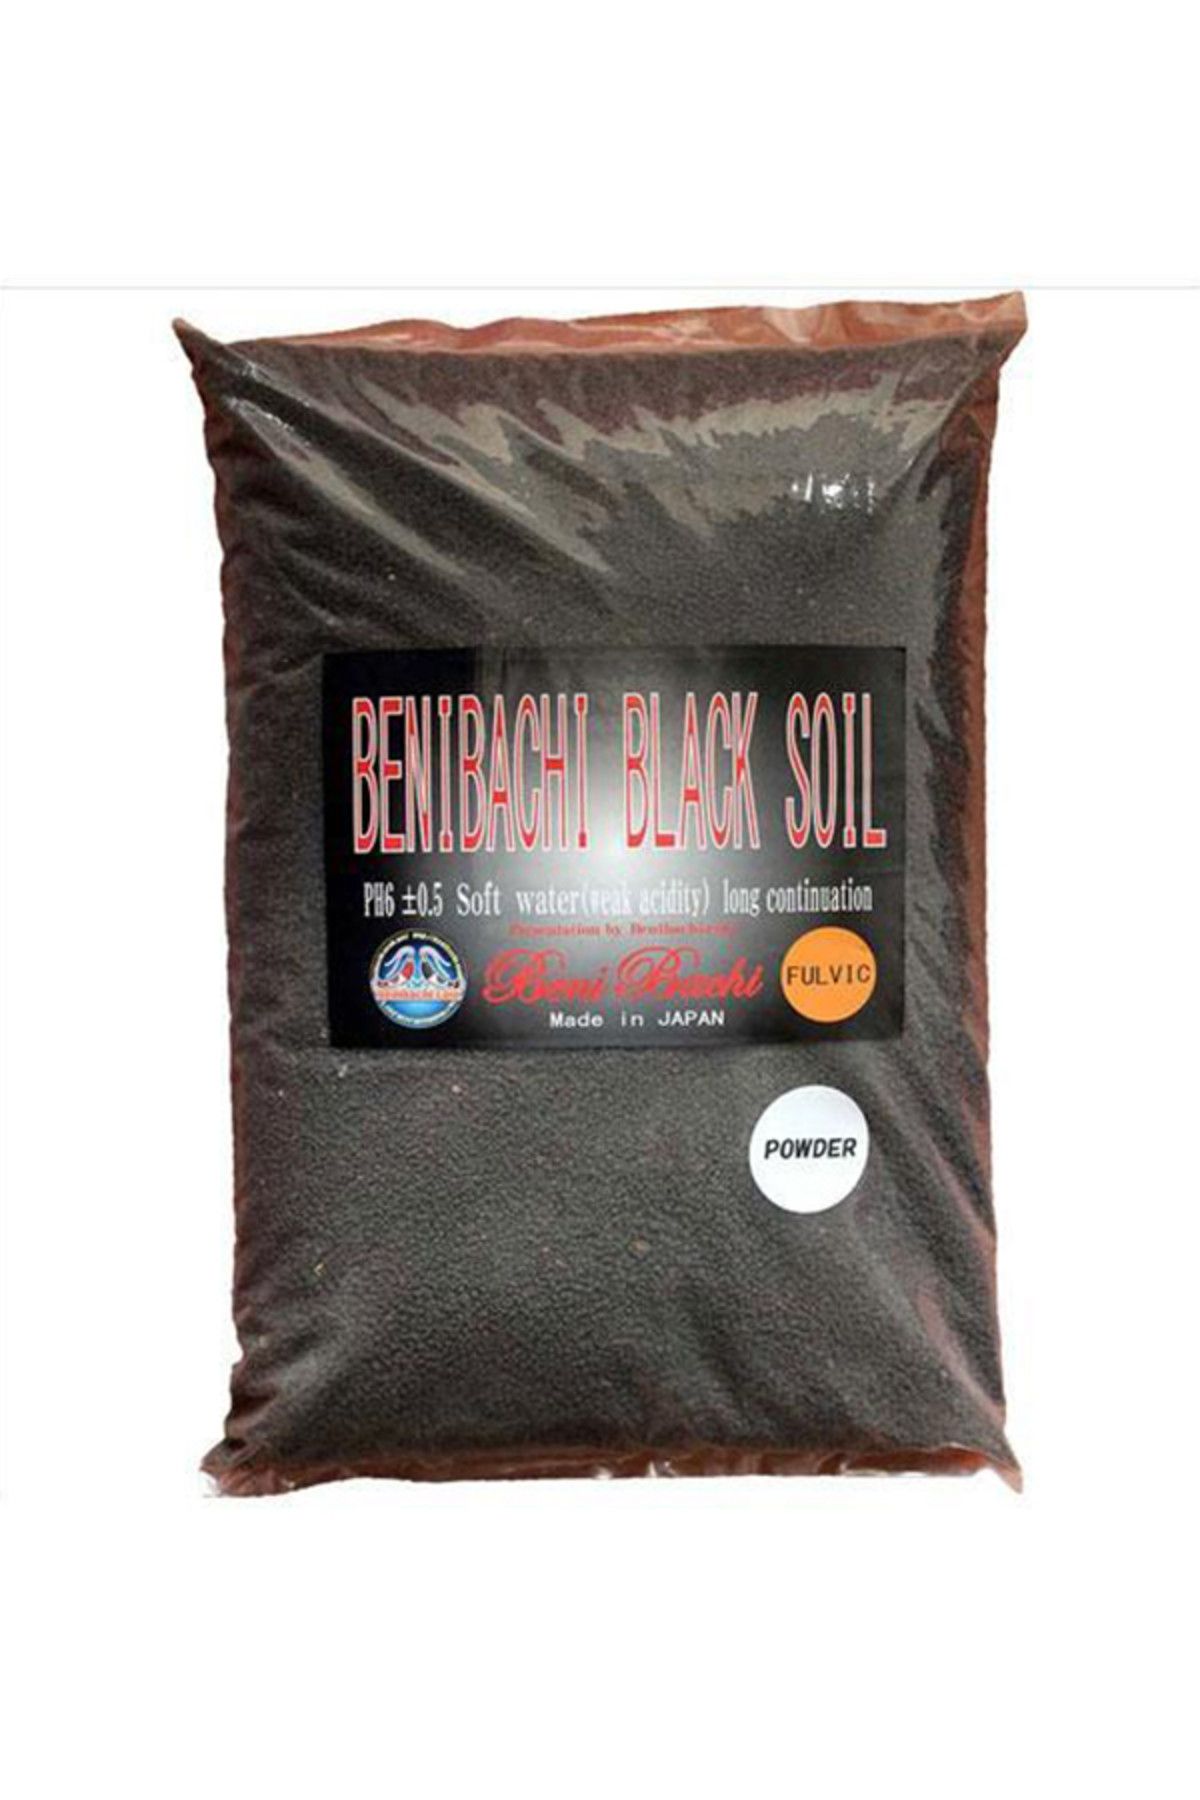 Benibachi Black Soil Fulvic Powder 5Kg